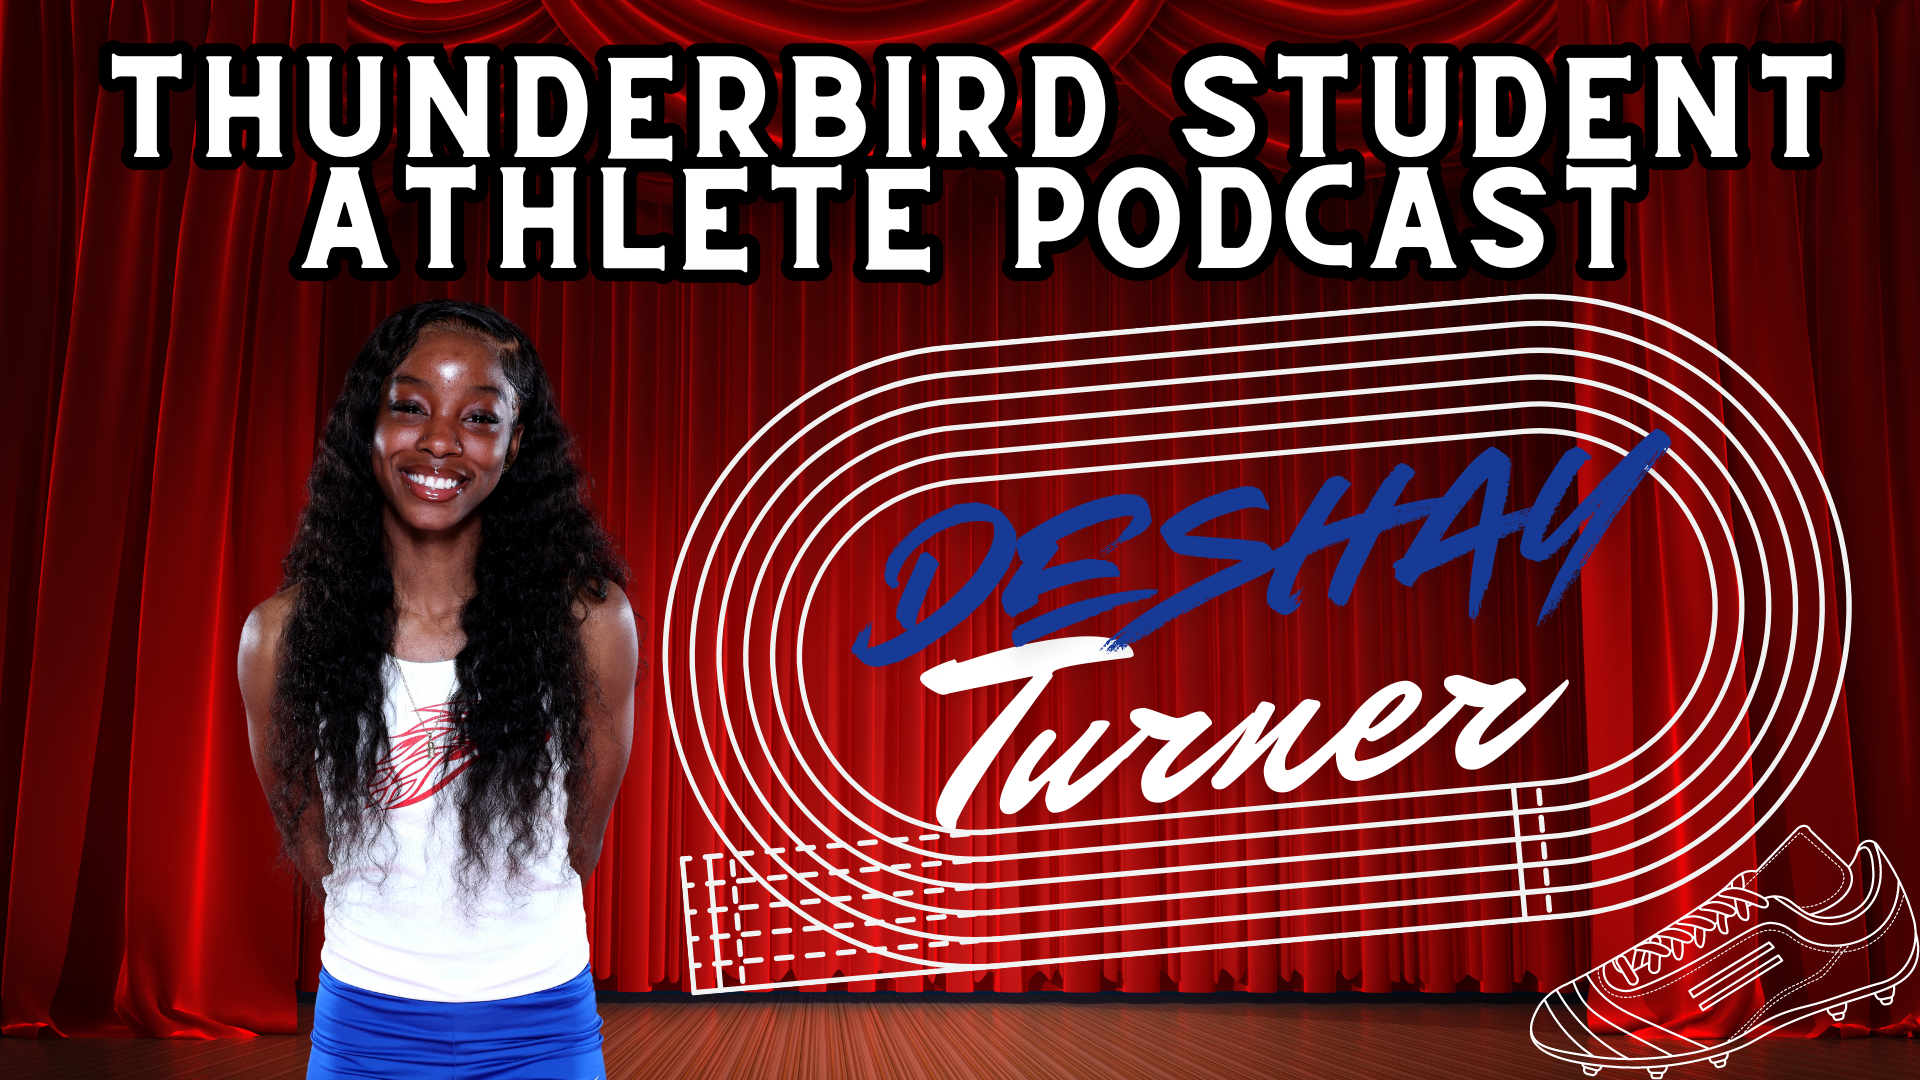 Thunderbird Student Athlete Podcast Featuring...Deshay Turner